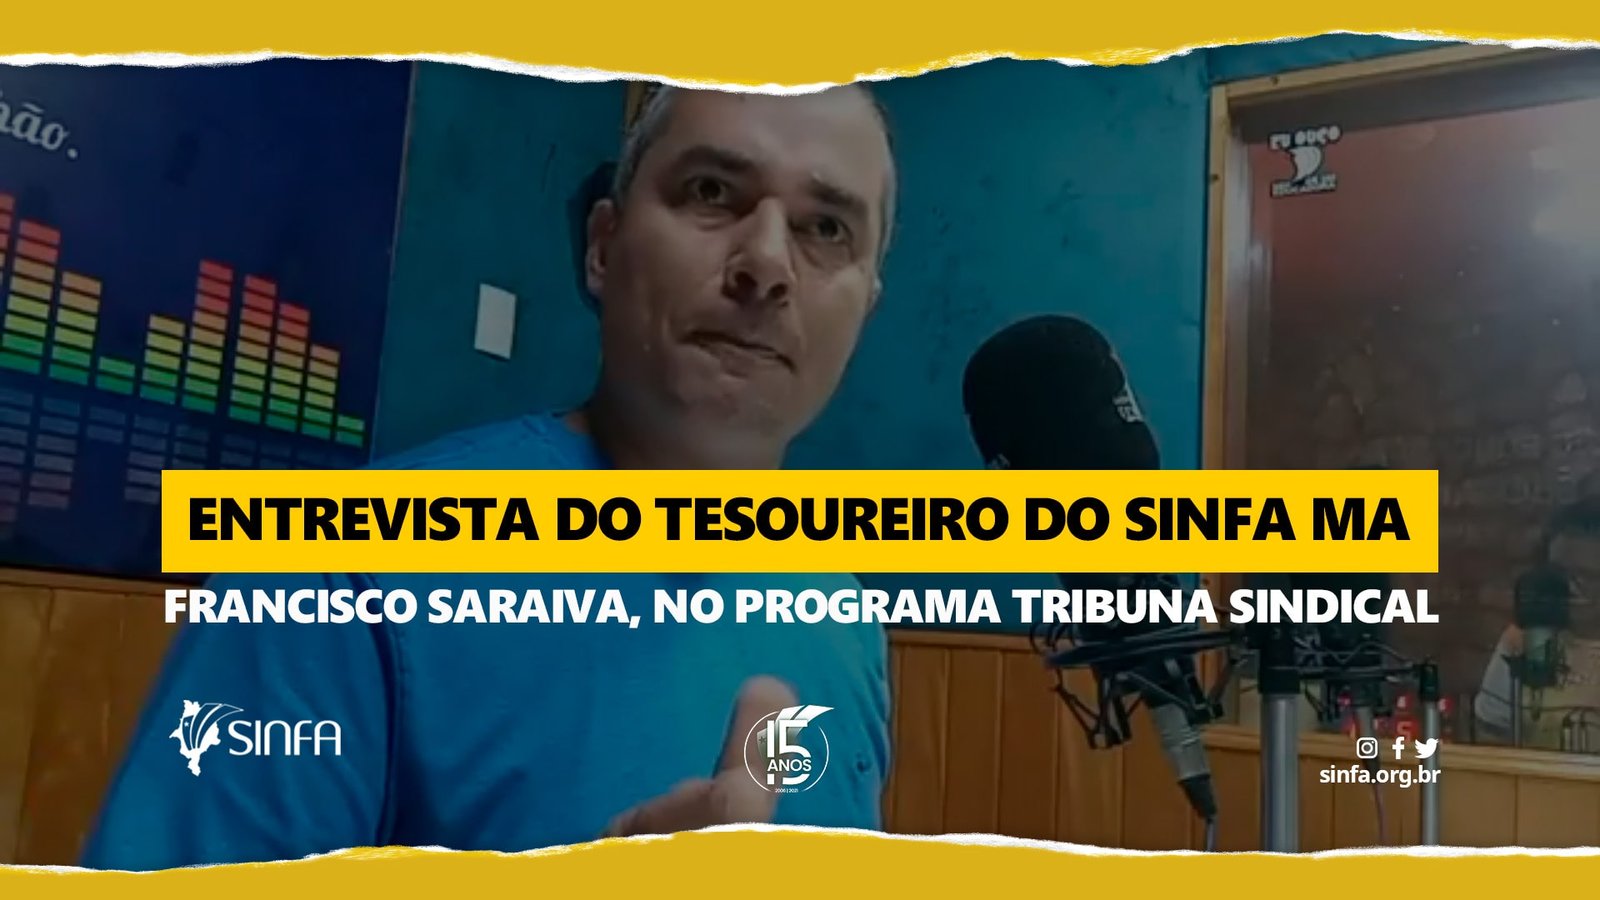 Entrevista do Tesoureiro do Sinfa - MA Francisco Saraiva, no programa Tribuna Sindical.